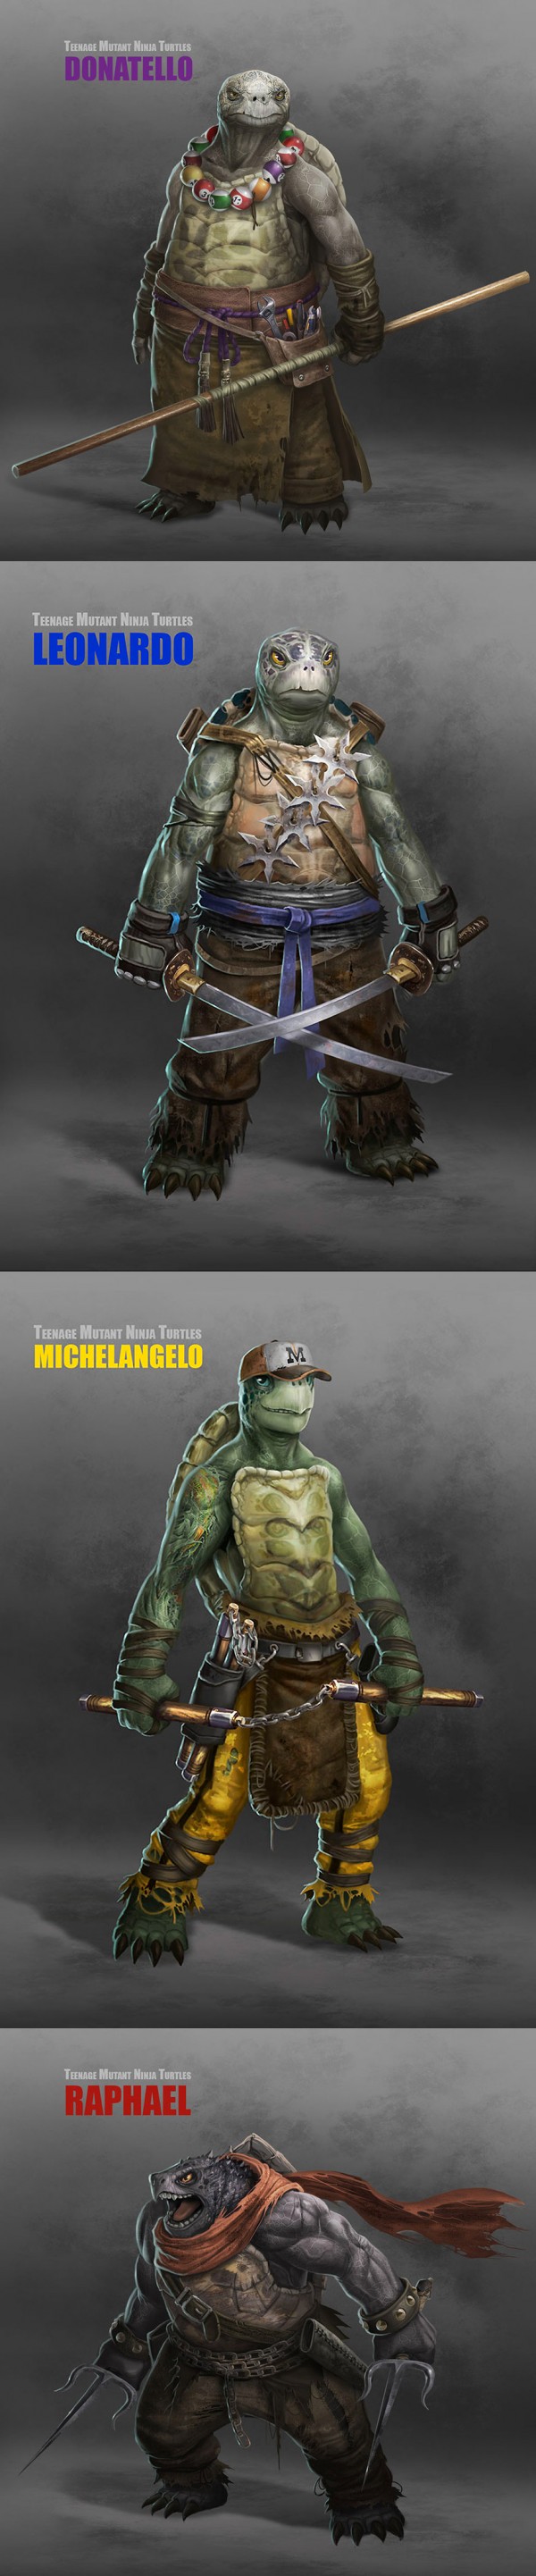 Las tortugas ninja mutantes realistas